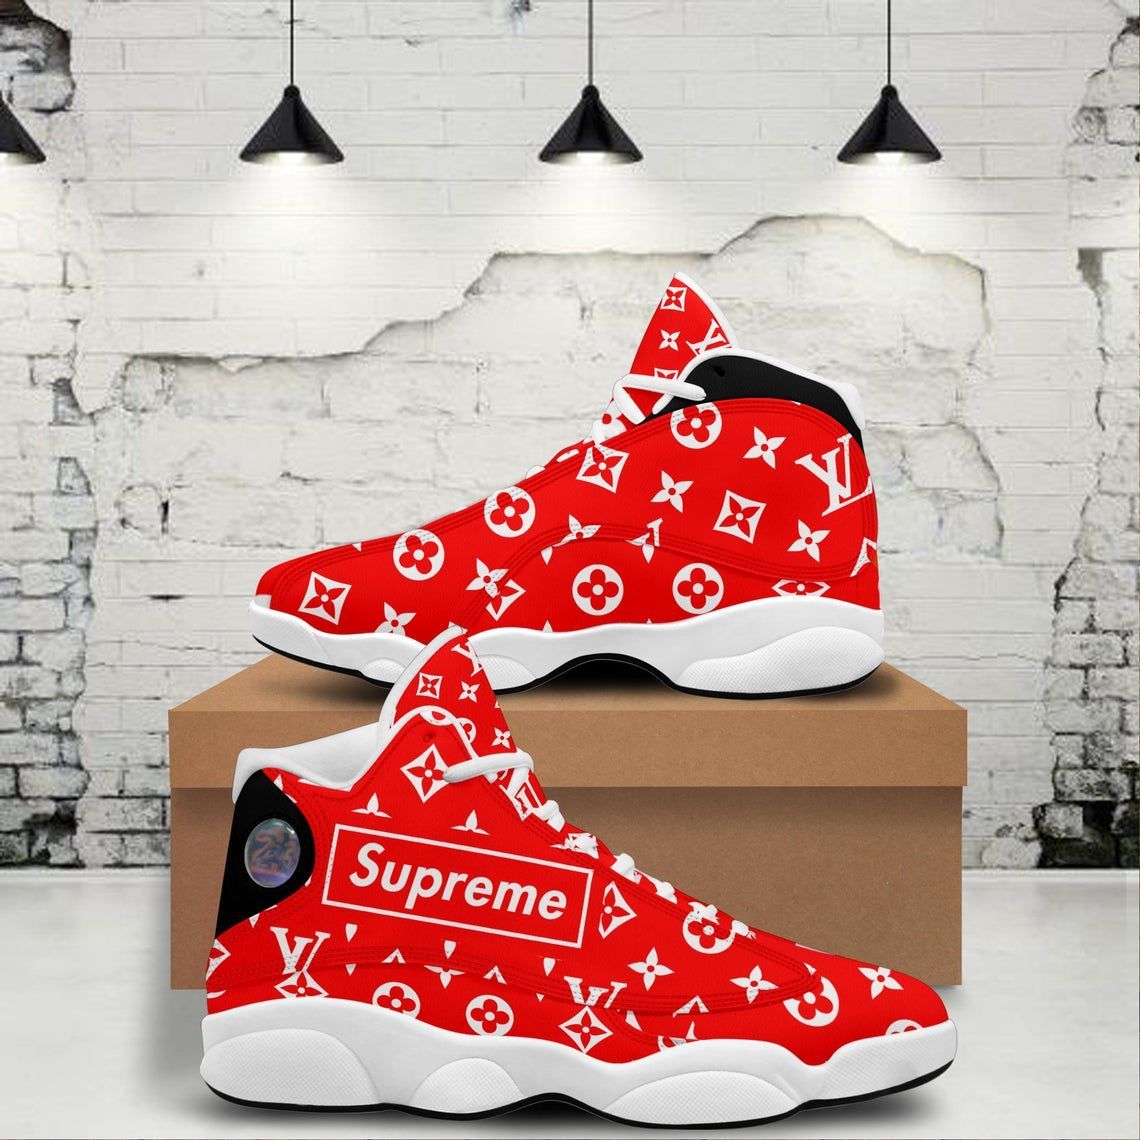 LV Louis Vuitton All Red Supreme Air Jordan 13 Luxury Sneakers Trending Shoes Fashion